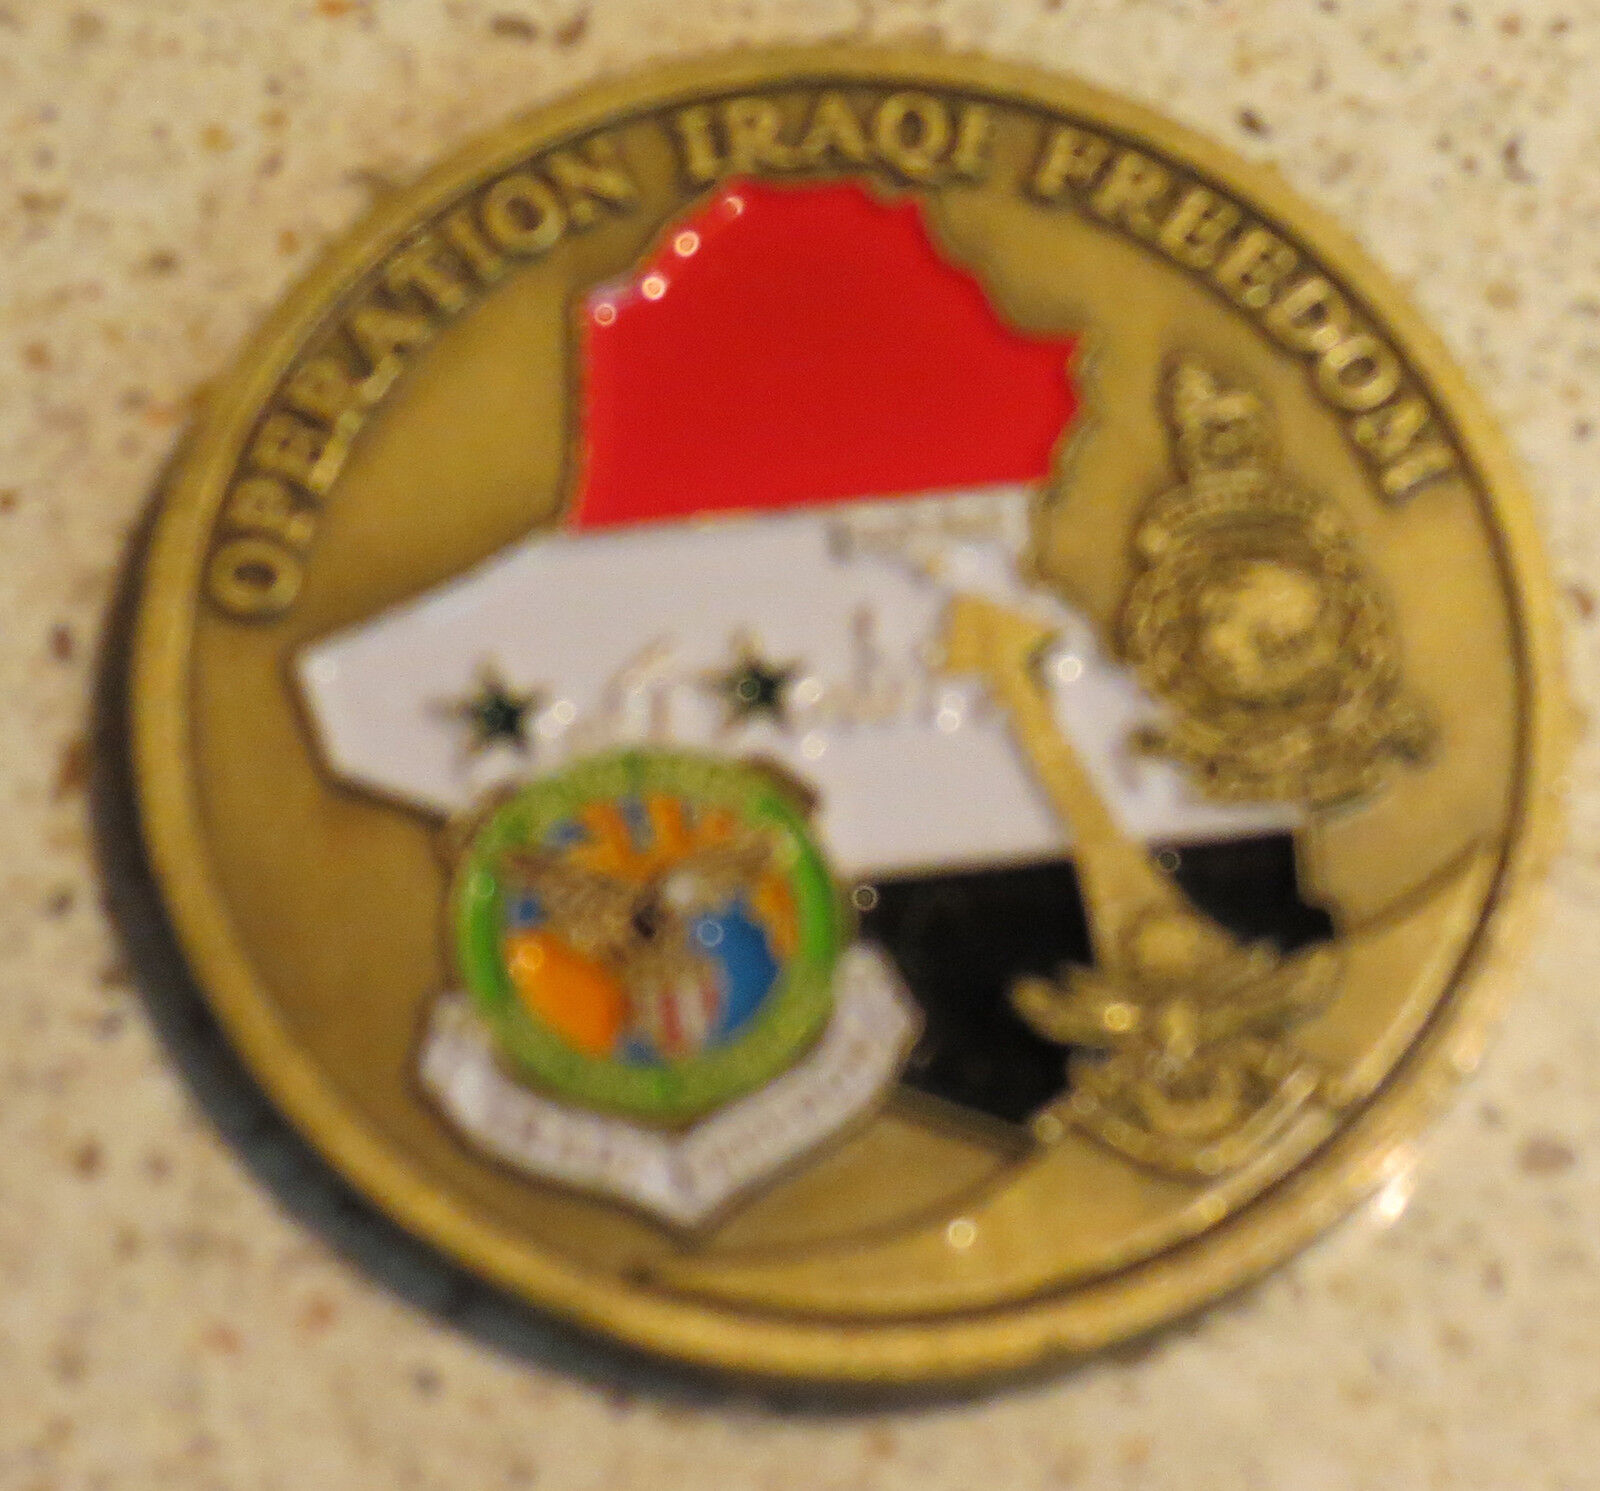 Operation Iraqi Freedom Royal Marines challenge coin - iraq war